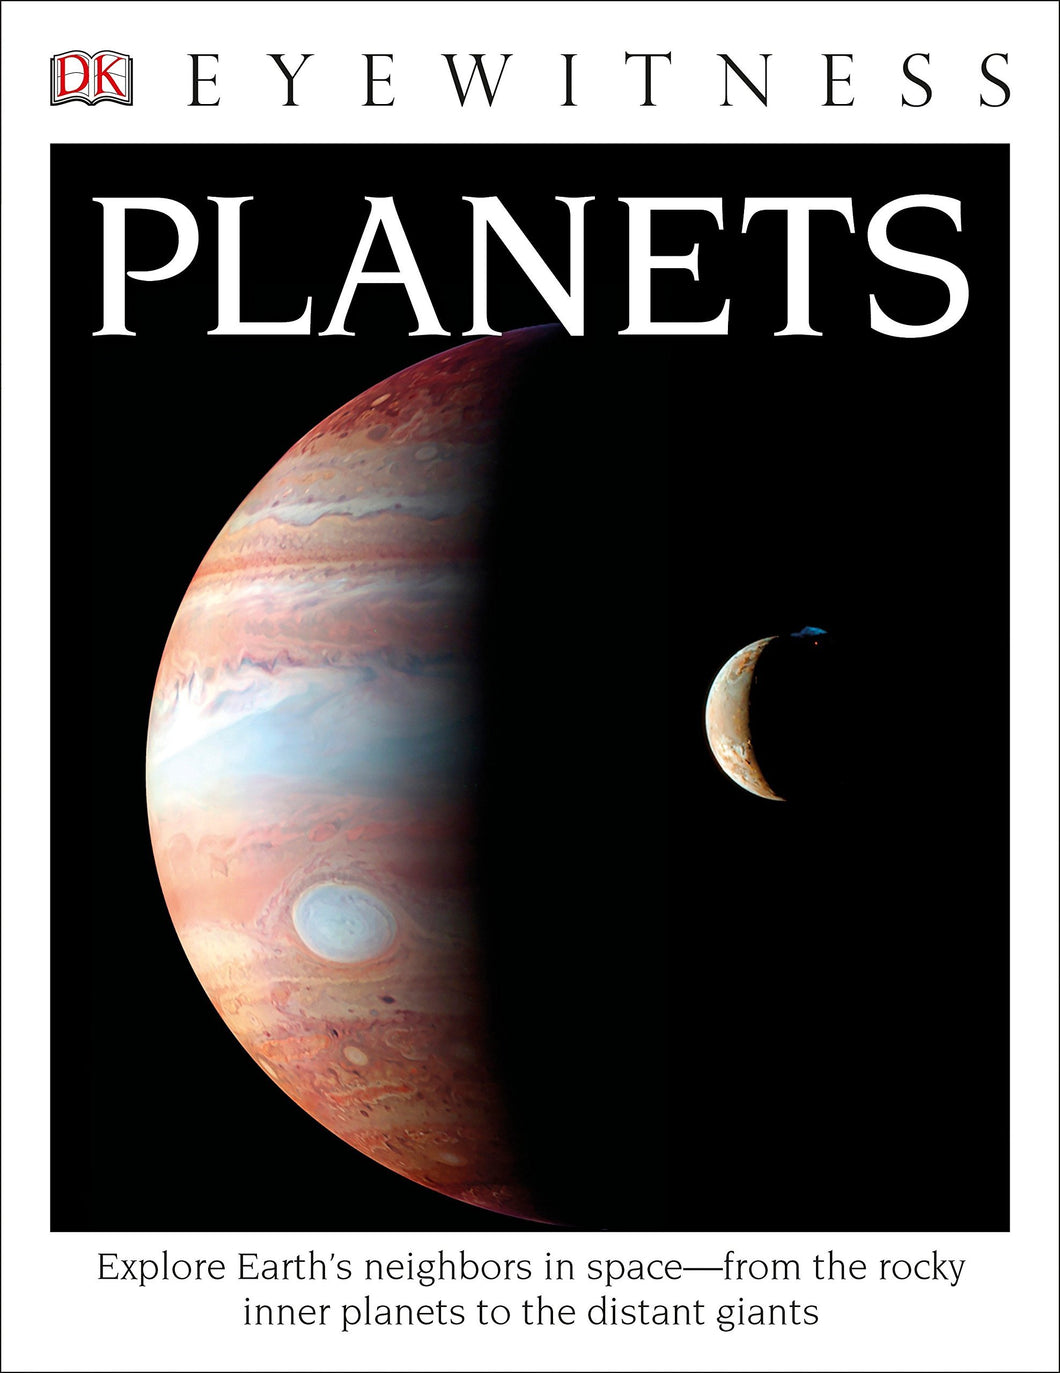 DK Eyewitness Books: Planets - ONLINE SCHOOL BOOK FAIRS 